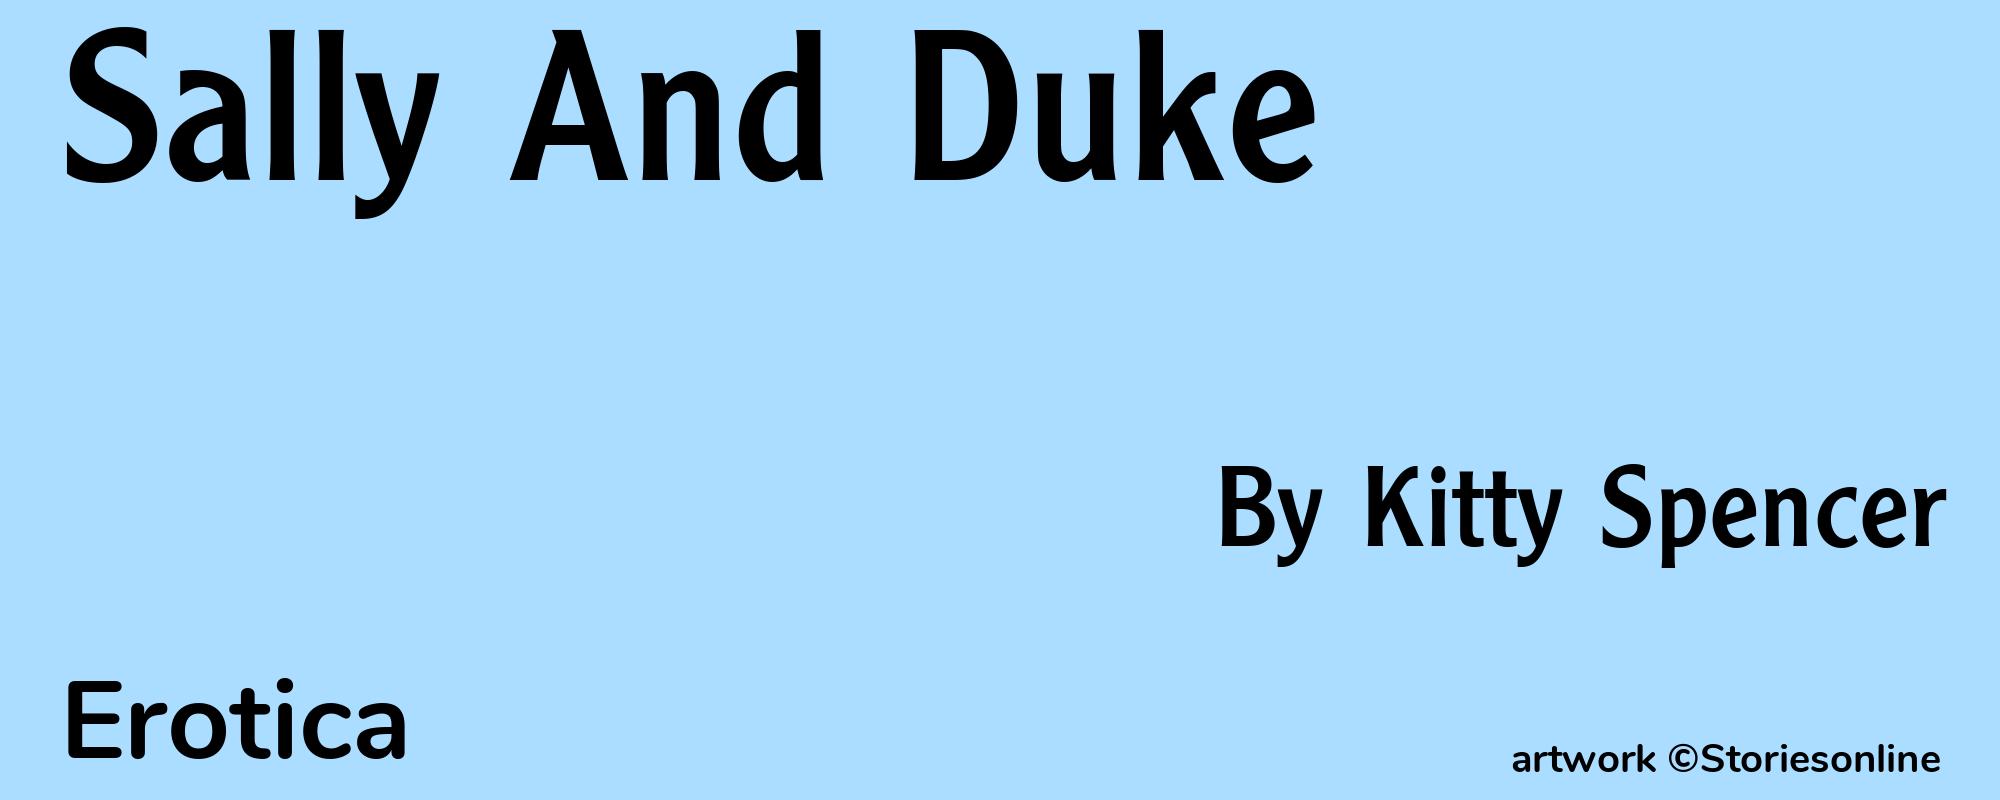 Sally And Duke - Cover